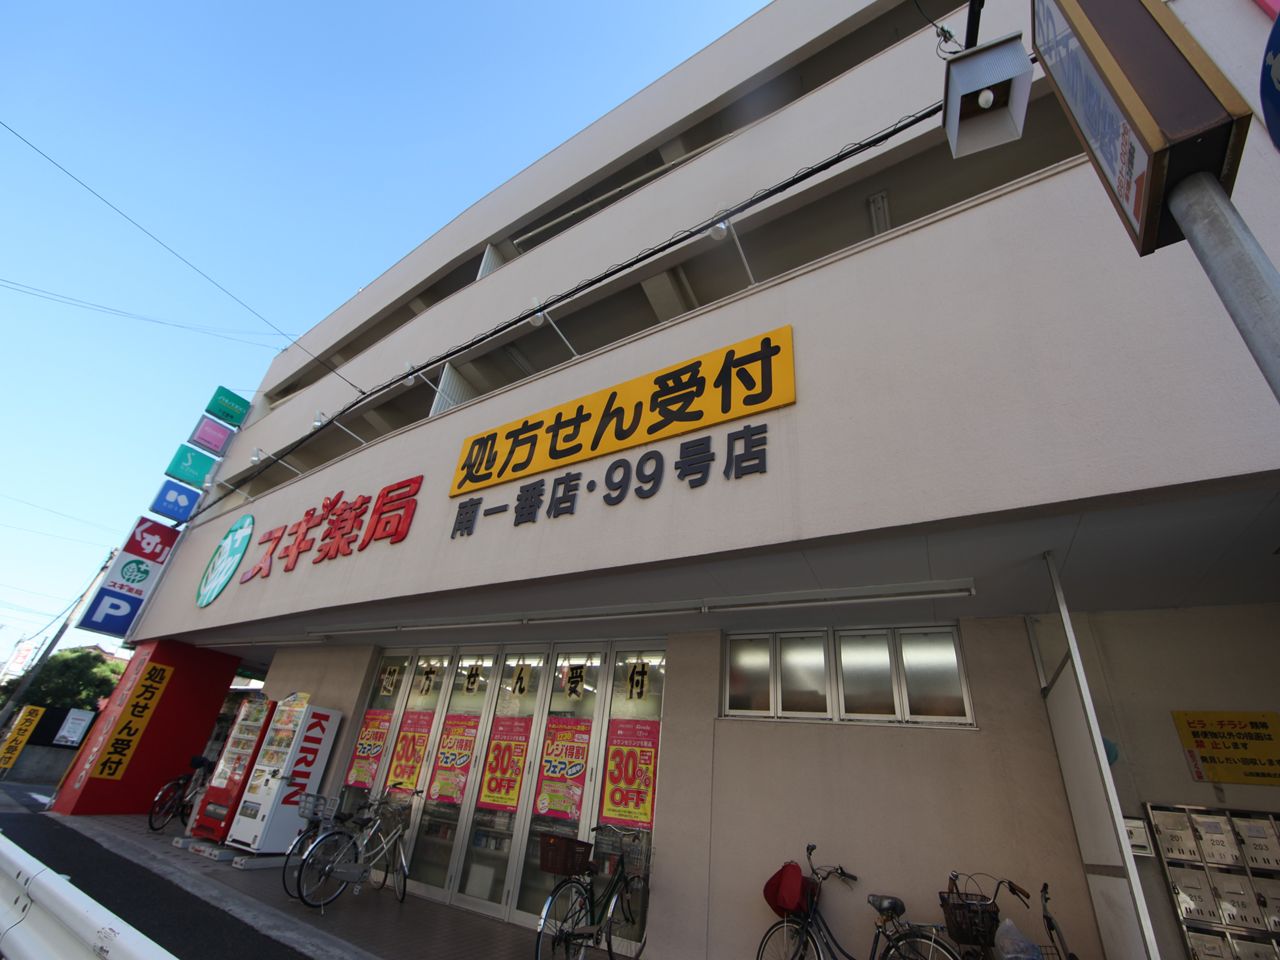 Dorakkusutoa. Cedar pharmacy Minamiichiban shop 543m until (drugstore)